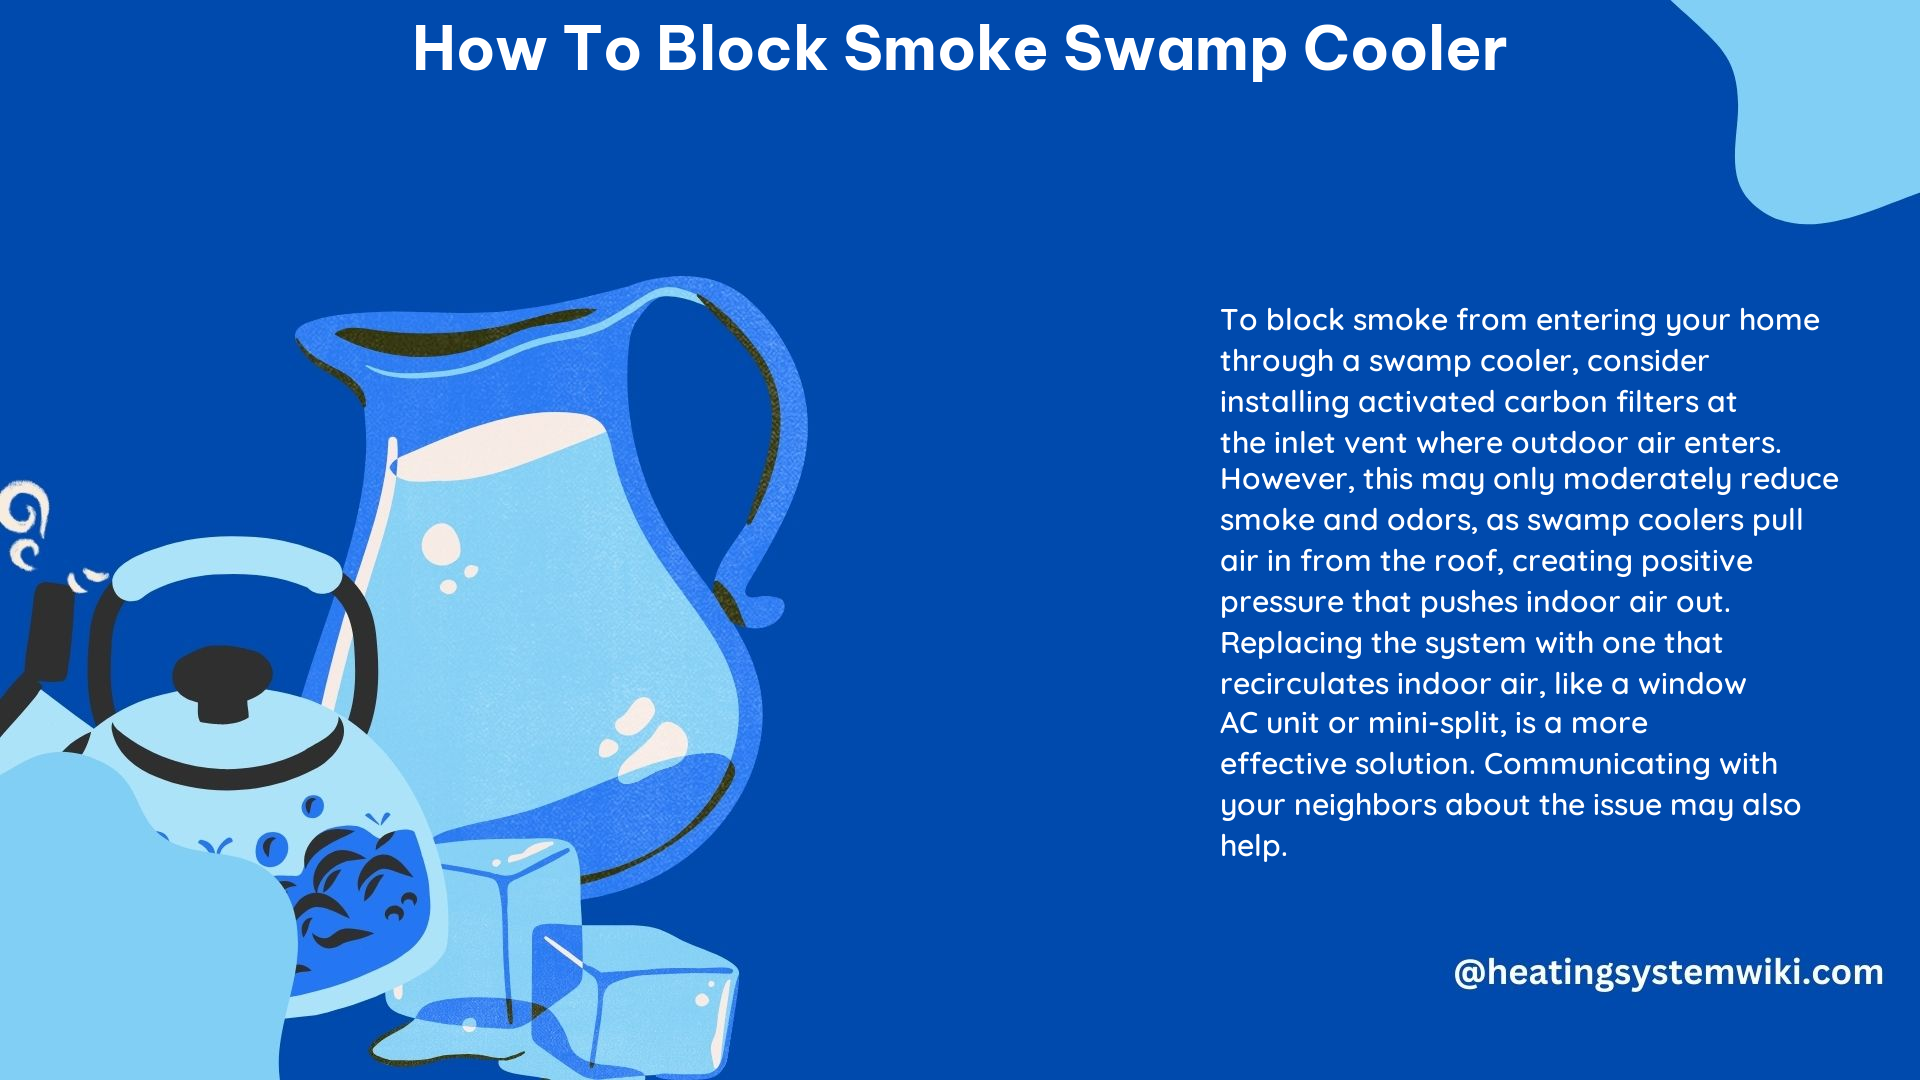 How to Block Smoke Swamp Cooler